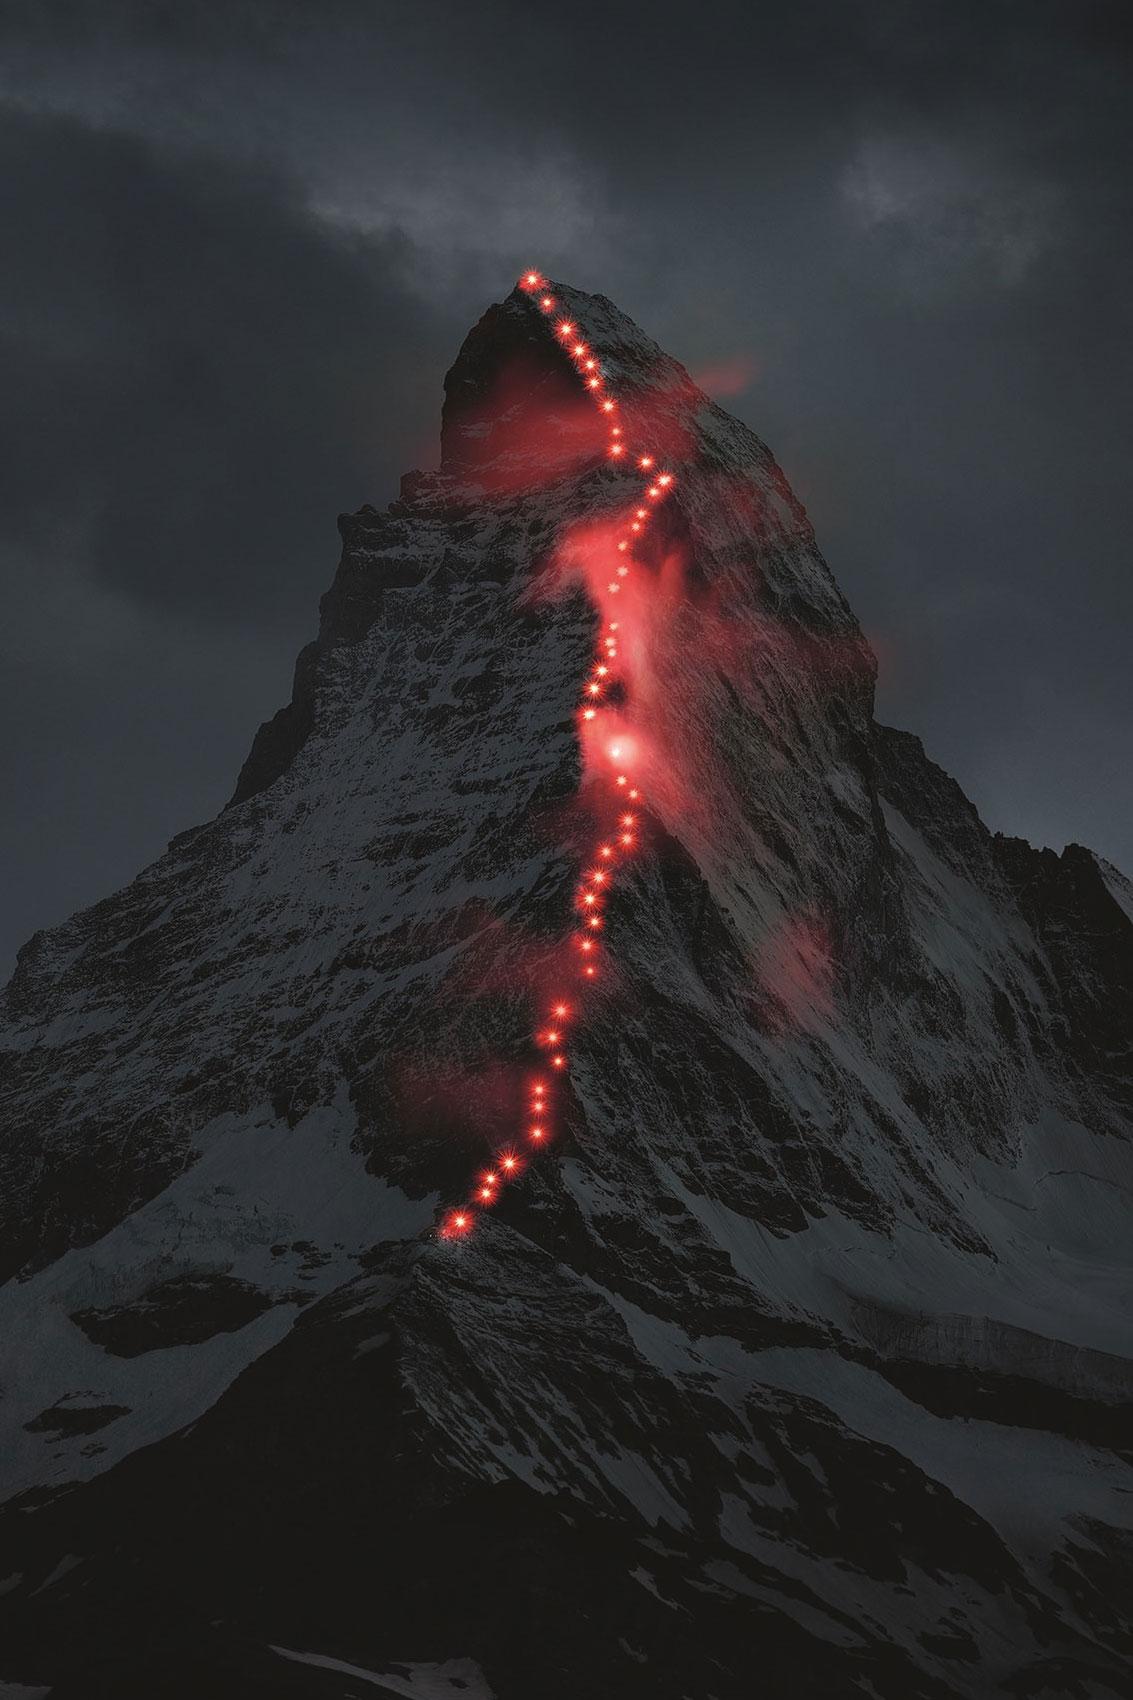 Lamps illuminate the path of the first ascent on the famous Matterhorn mountain, in Zermatt, Switzerland.